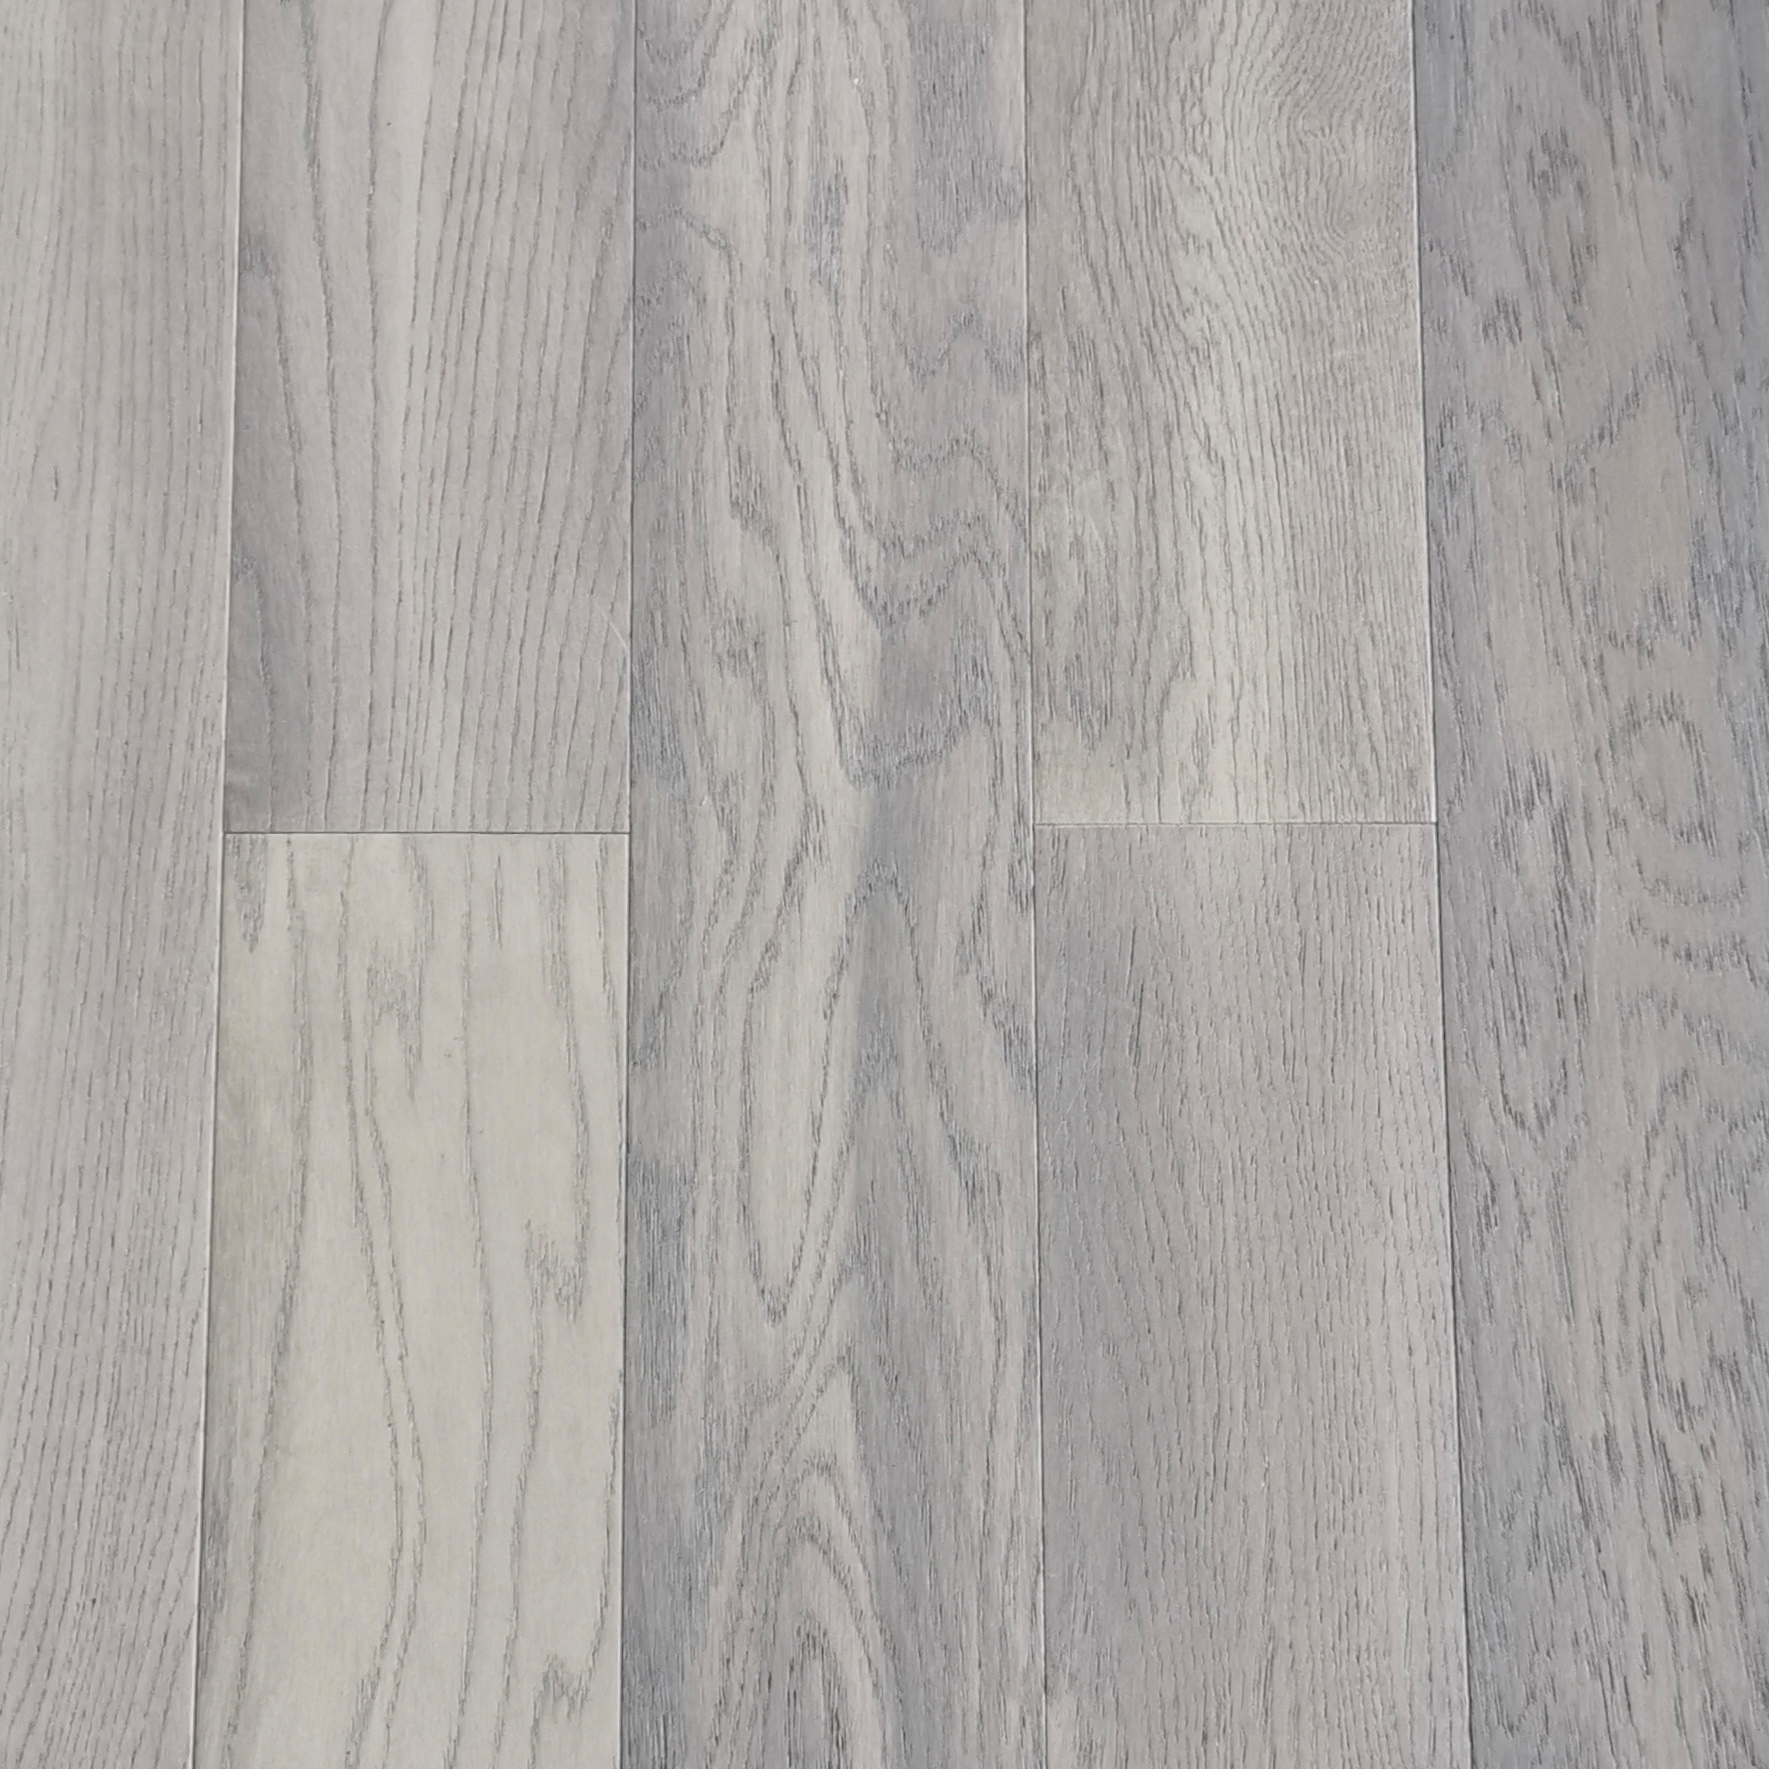 Personlized Products Timber Floorboards -
 100% Waterproof Luxury Wood Veneer SPC Flooring with SPC Core Base – Kangton